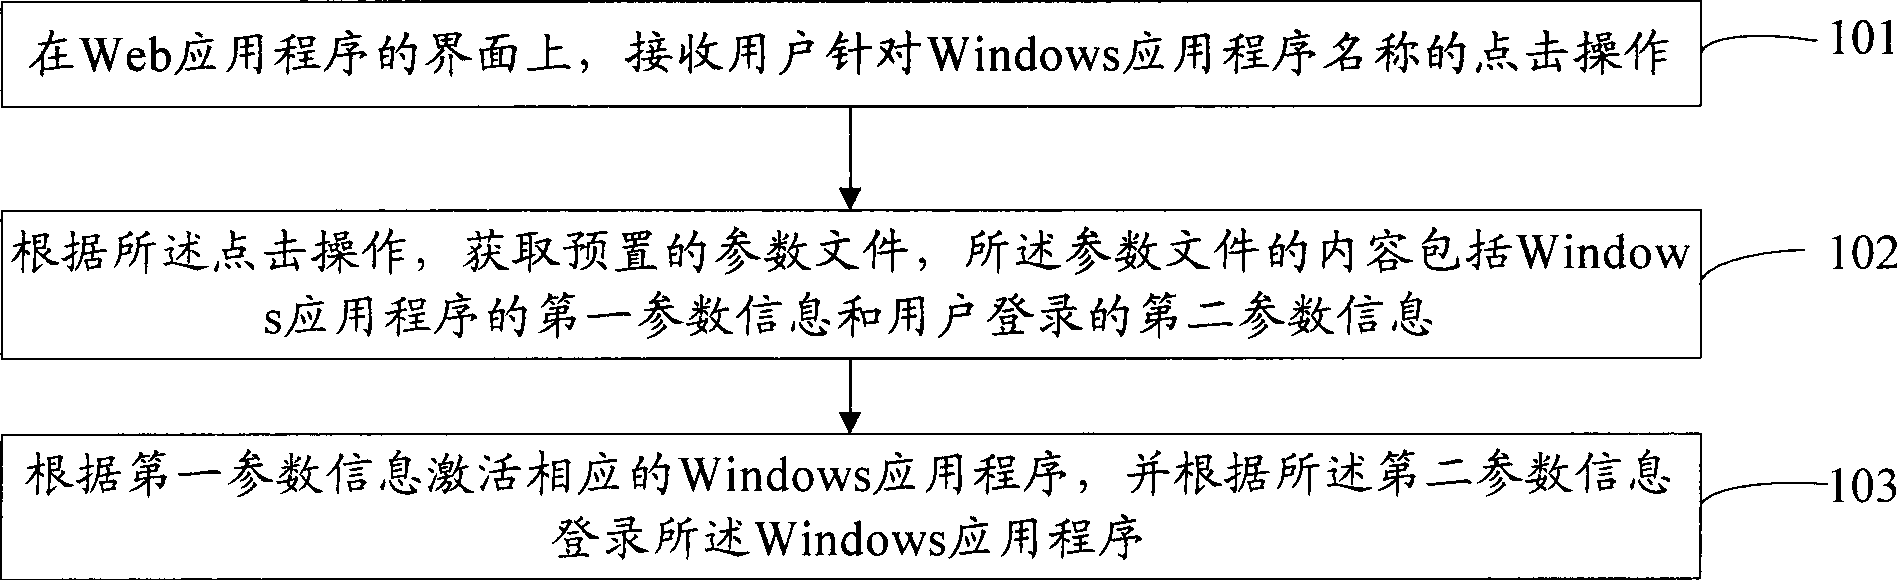 Method and apparatus for login of Windows application program through Web application